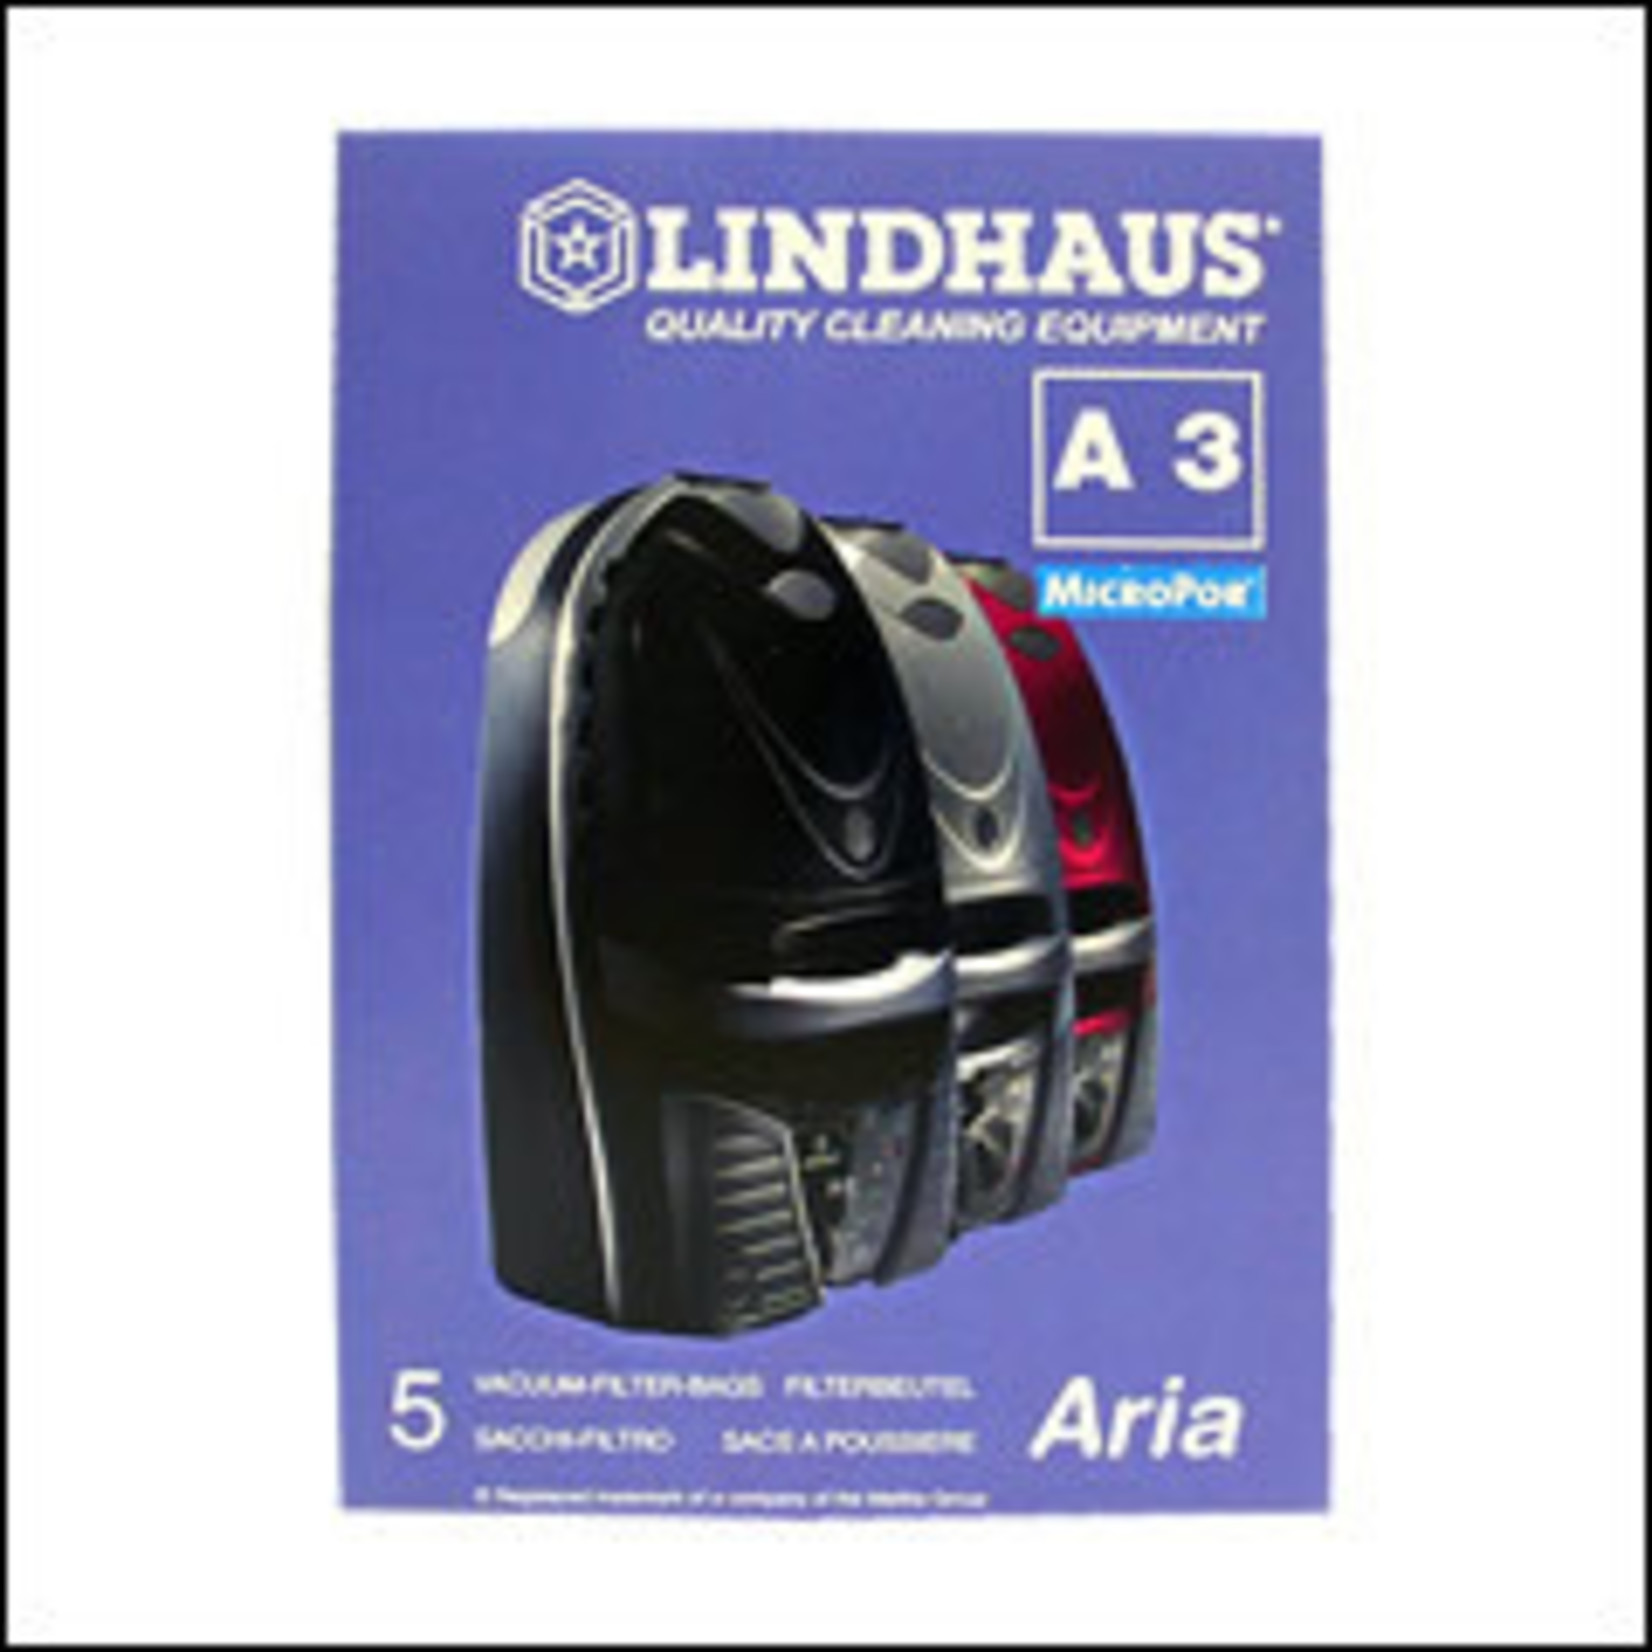 Lindhaus Lindhaus "A3" HEPA Cloth Bag (5pk)